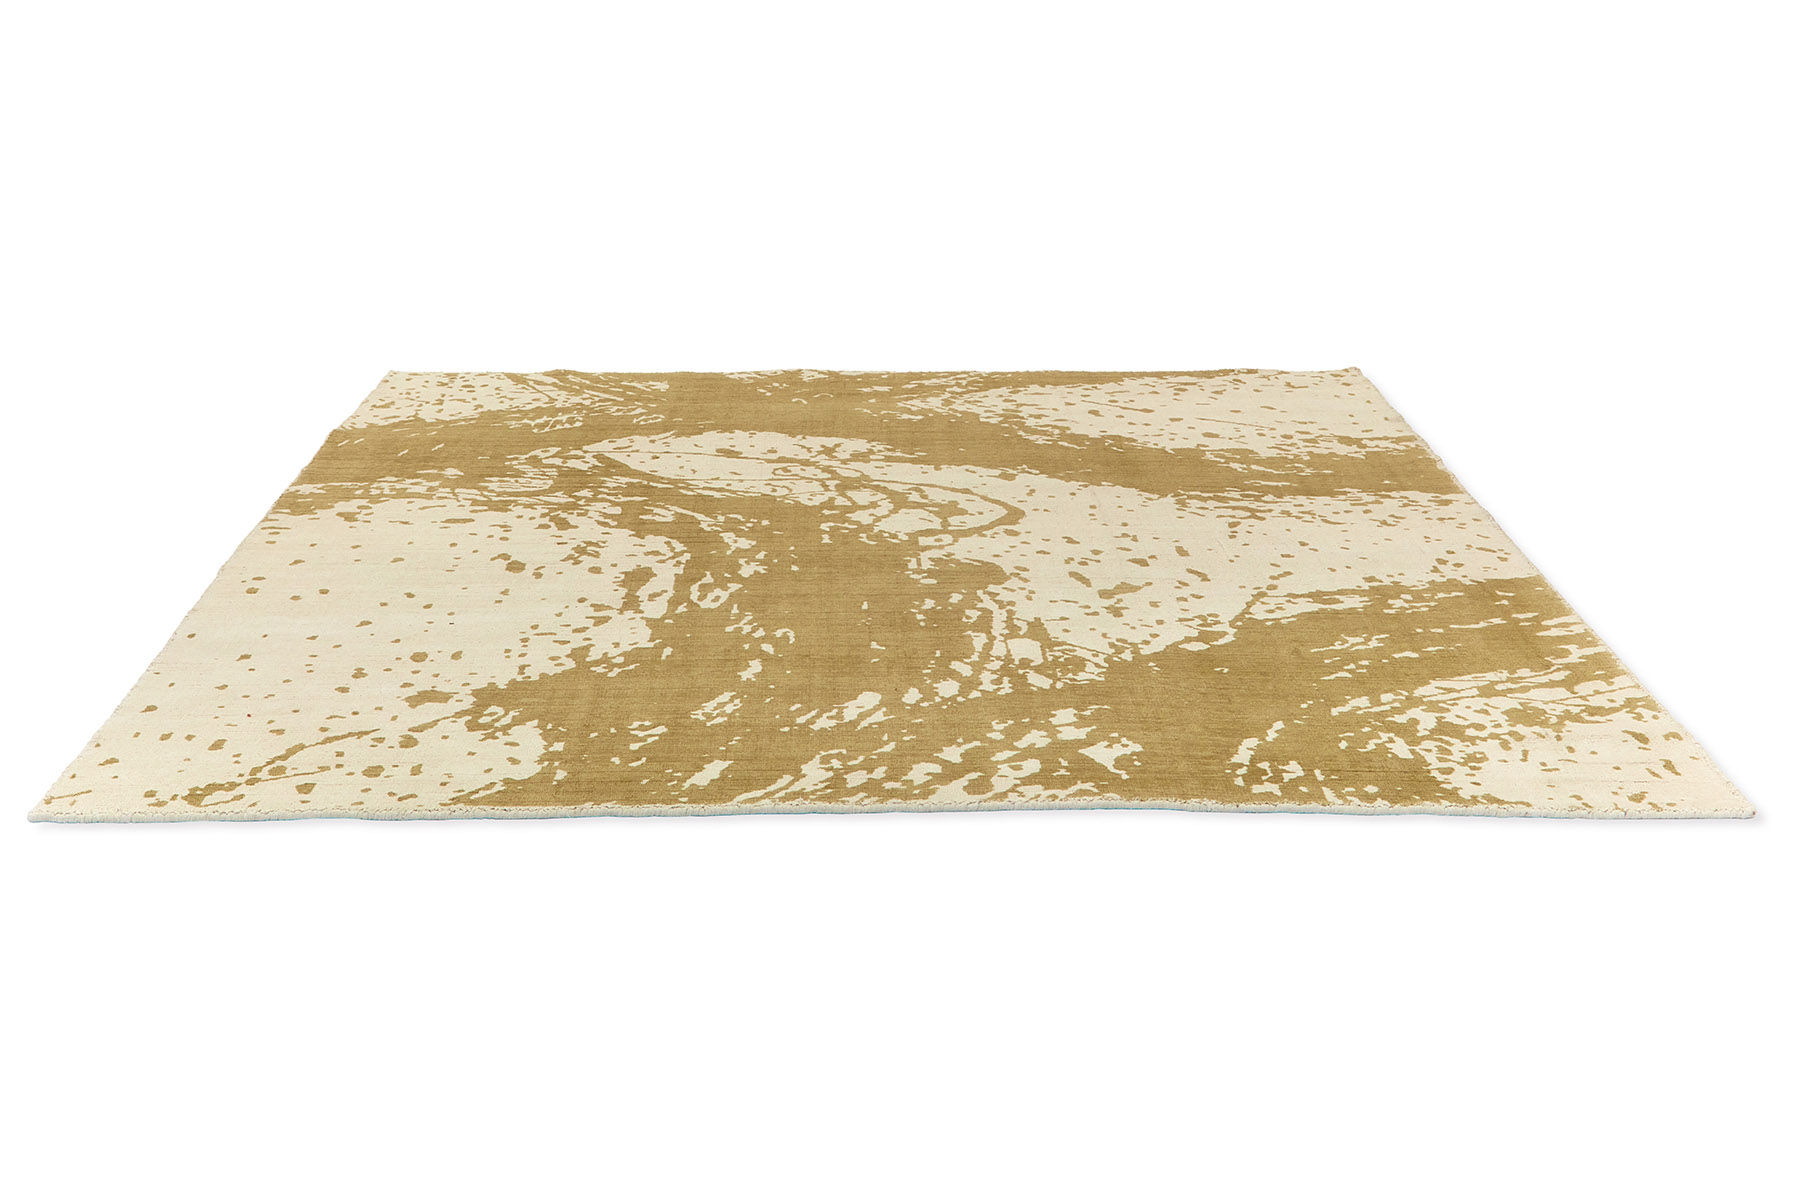 Enigmatic Sahara Awakening Rug ☞ Size: 170 x 240 cm